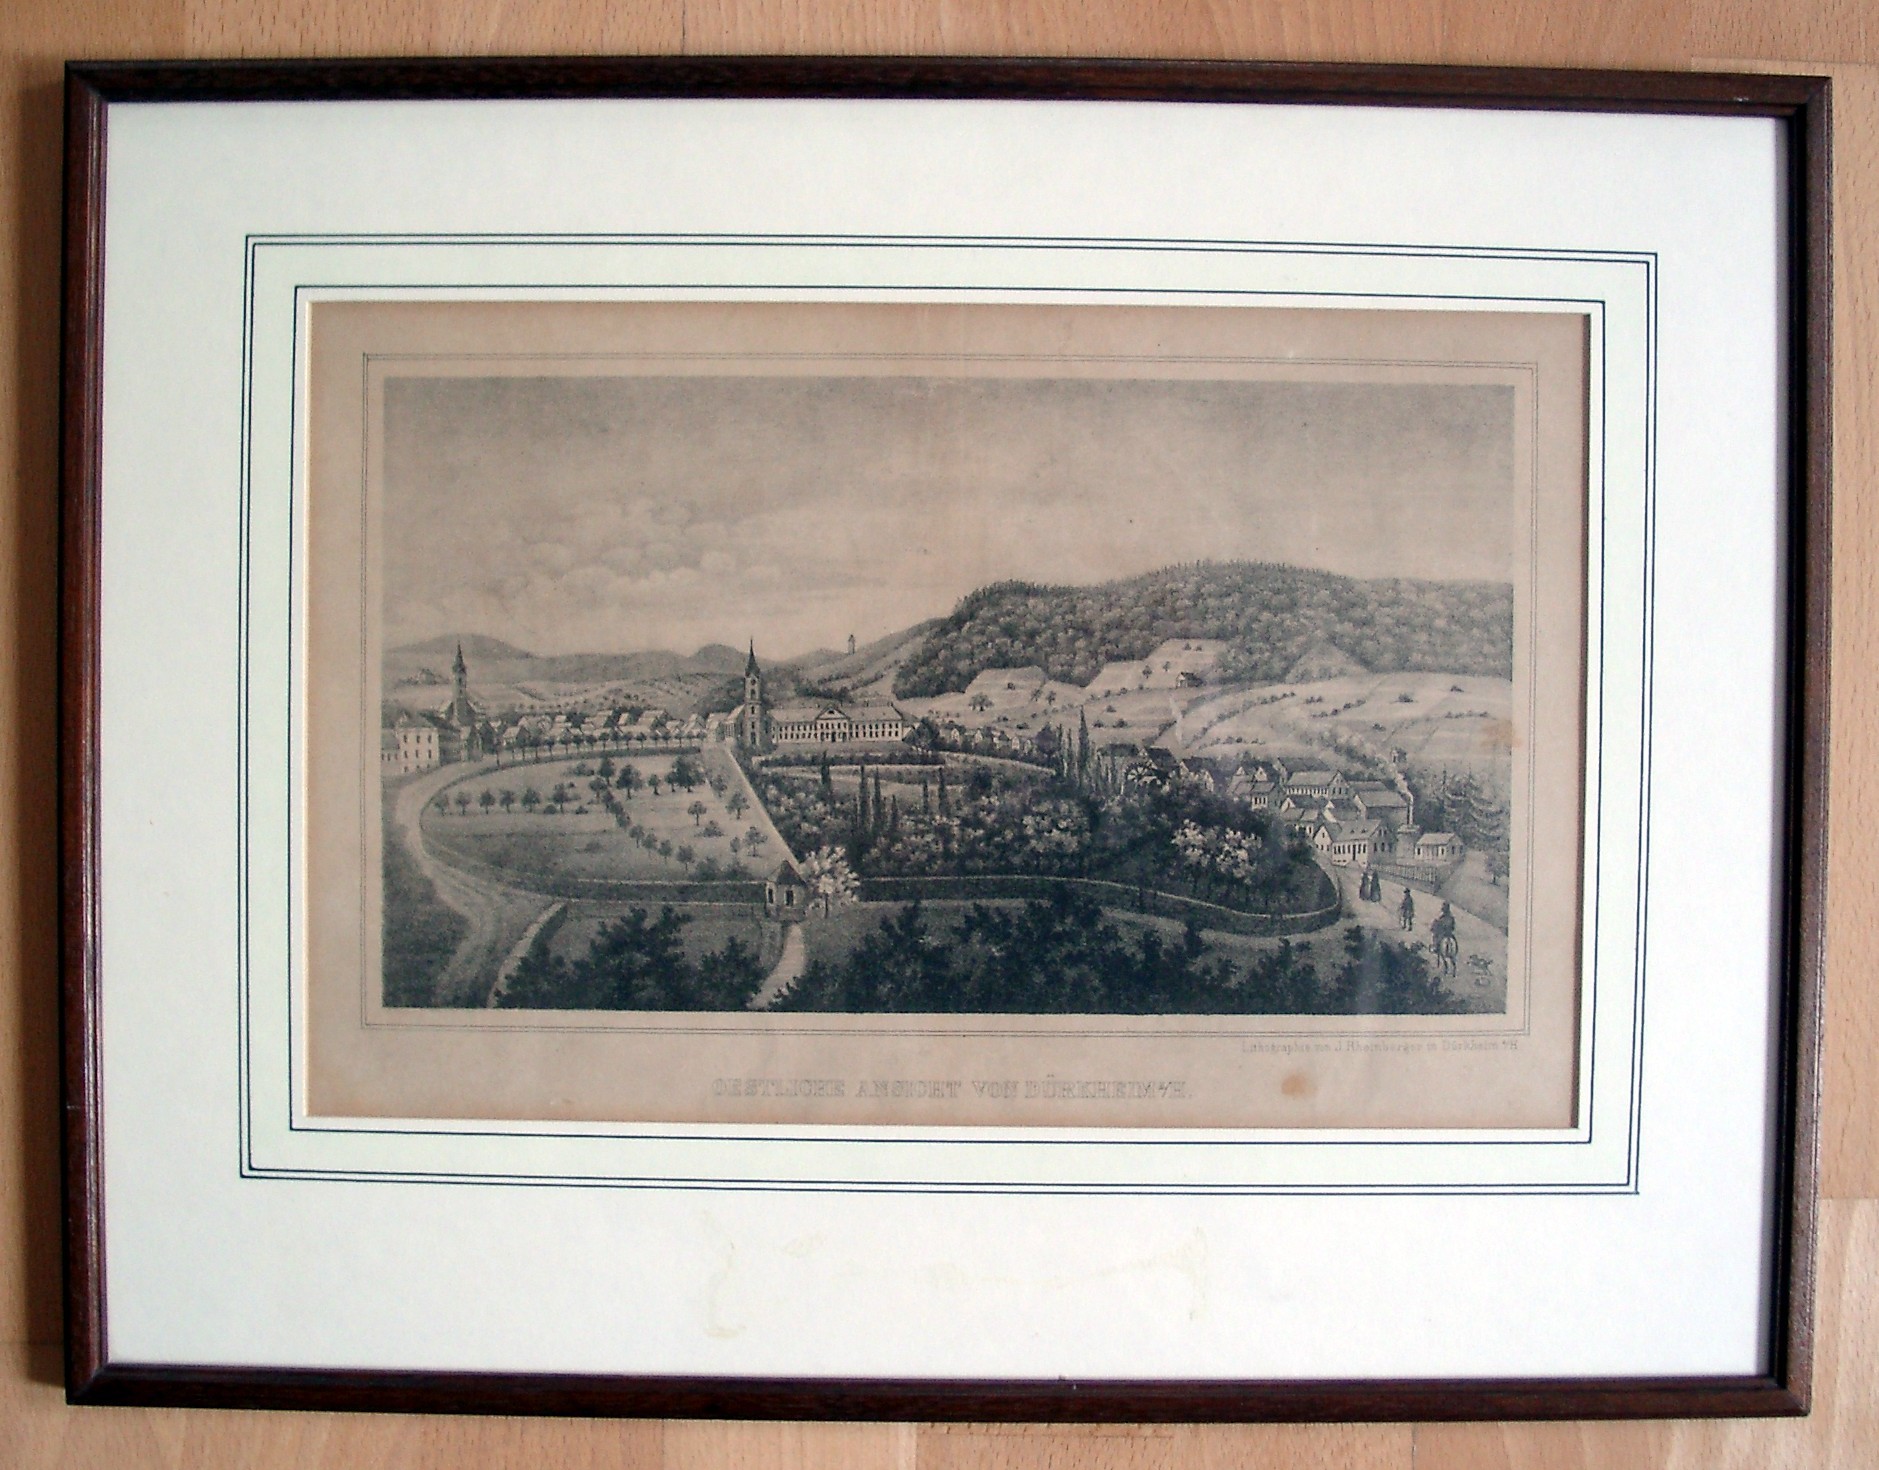 Bild; Lithographie: "Oestliche Ansicht von Dürkheim a/H."; J. Rheinberger; um 1850 (Stadtmuseum Bad Dürkheim, Museumsgesellschaft Bad Dürkheim e.V. CC BY-NC-SA)